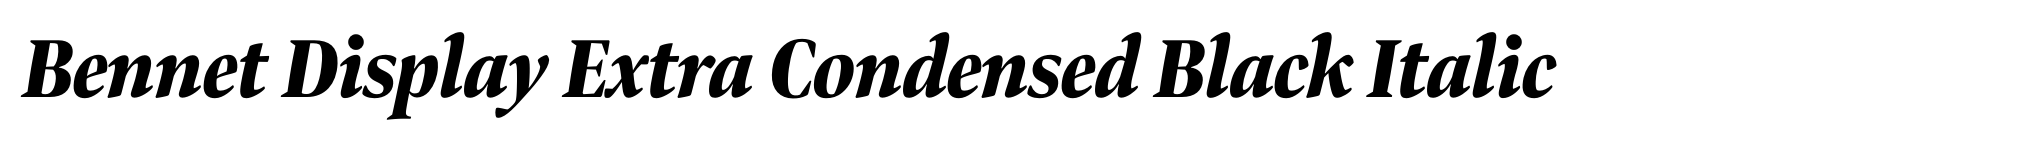 Bennet Display Extra Condensed Black Italic image